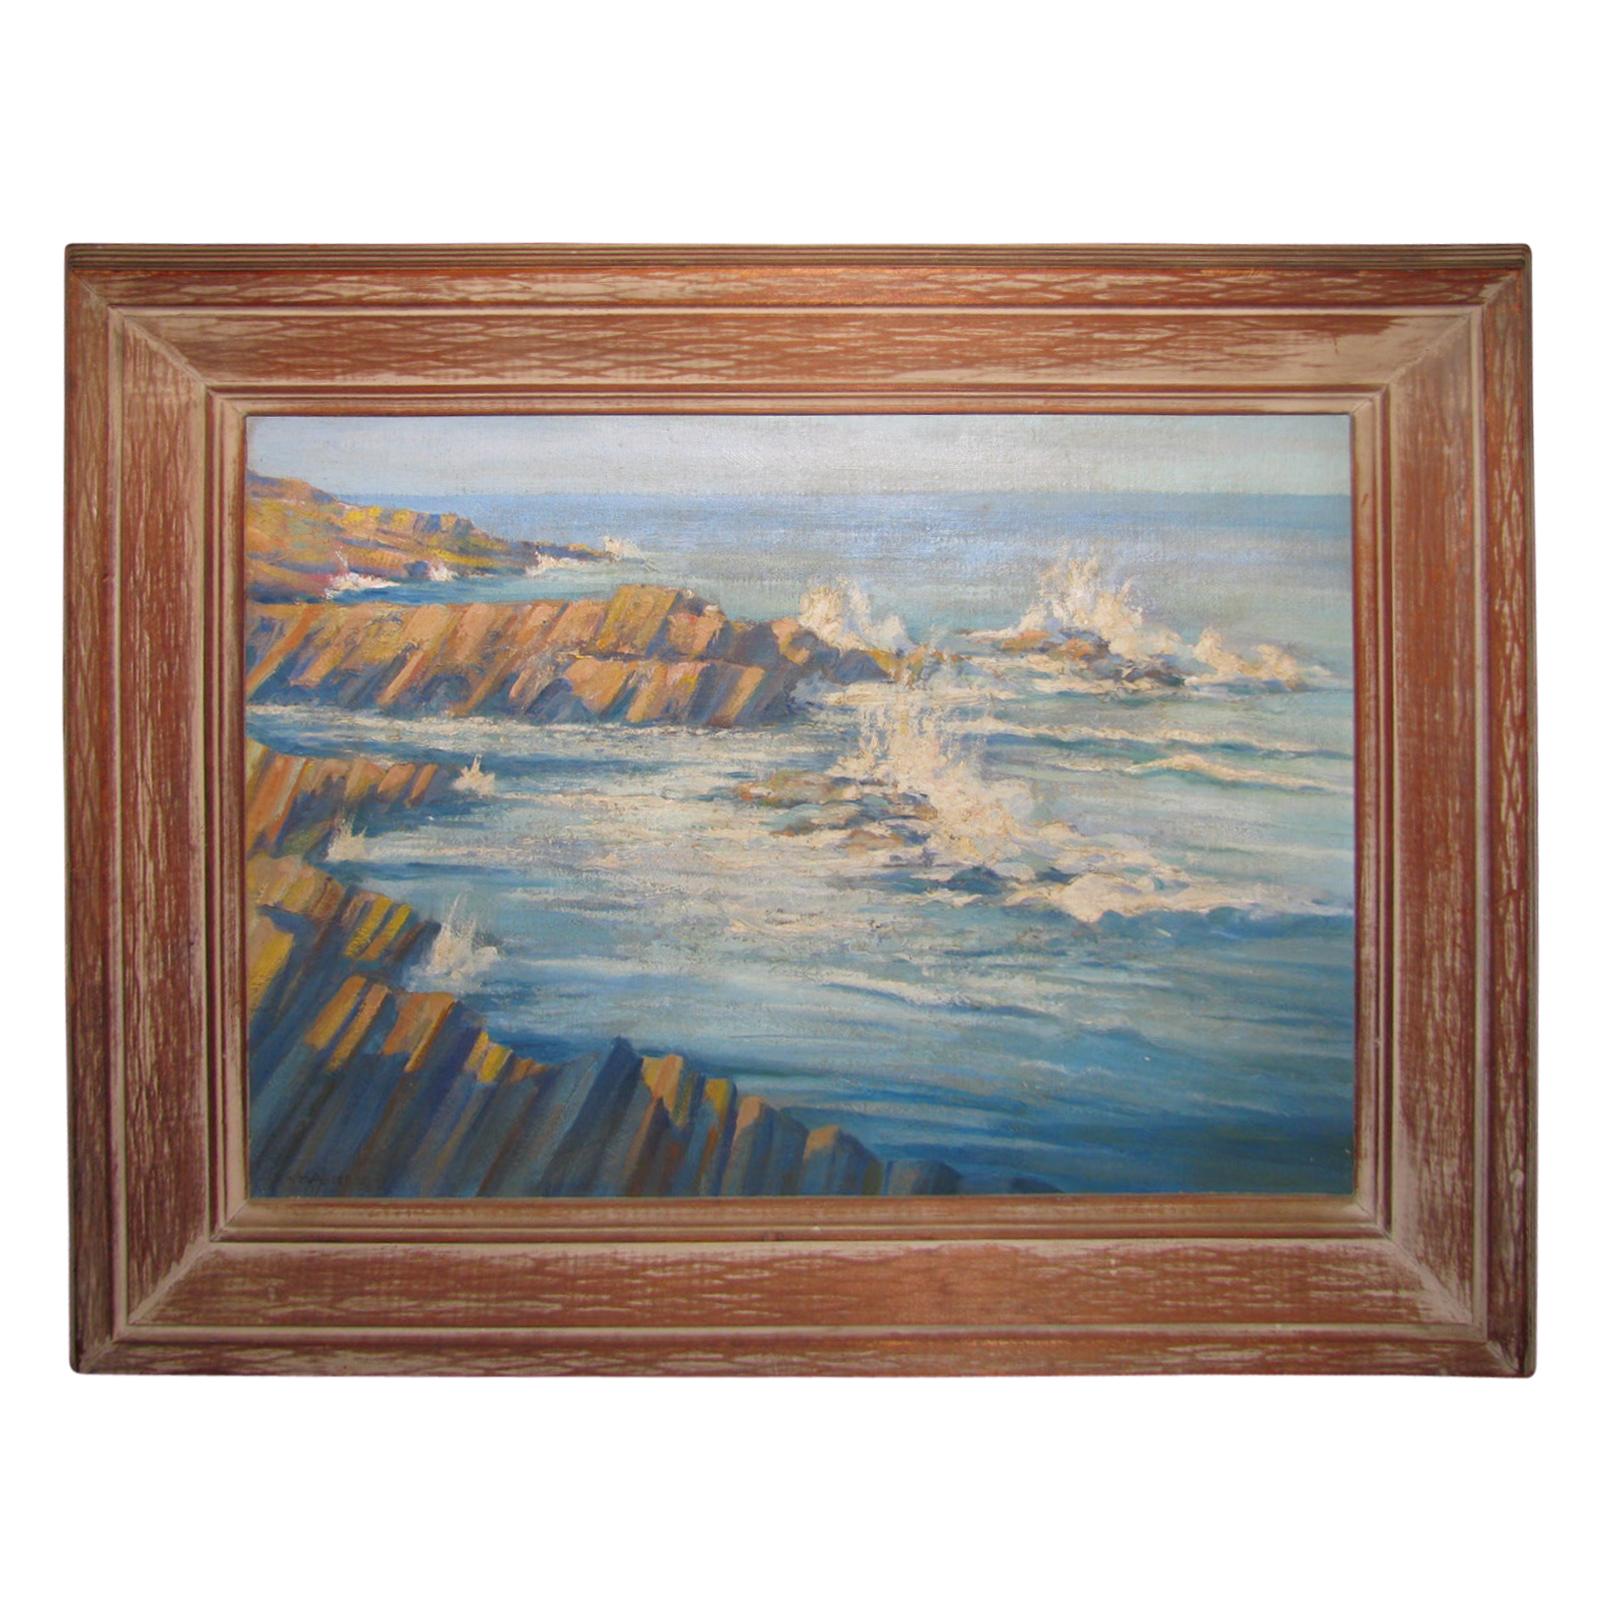 Oil on Board Seascape by Maine Artist Charles Andrew Hafner, 1937